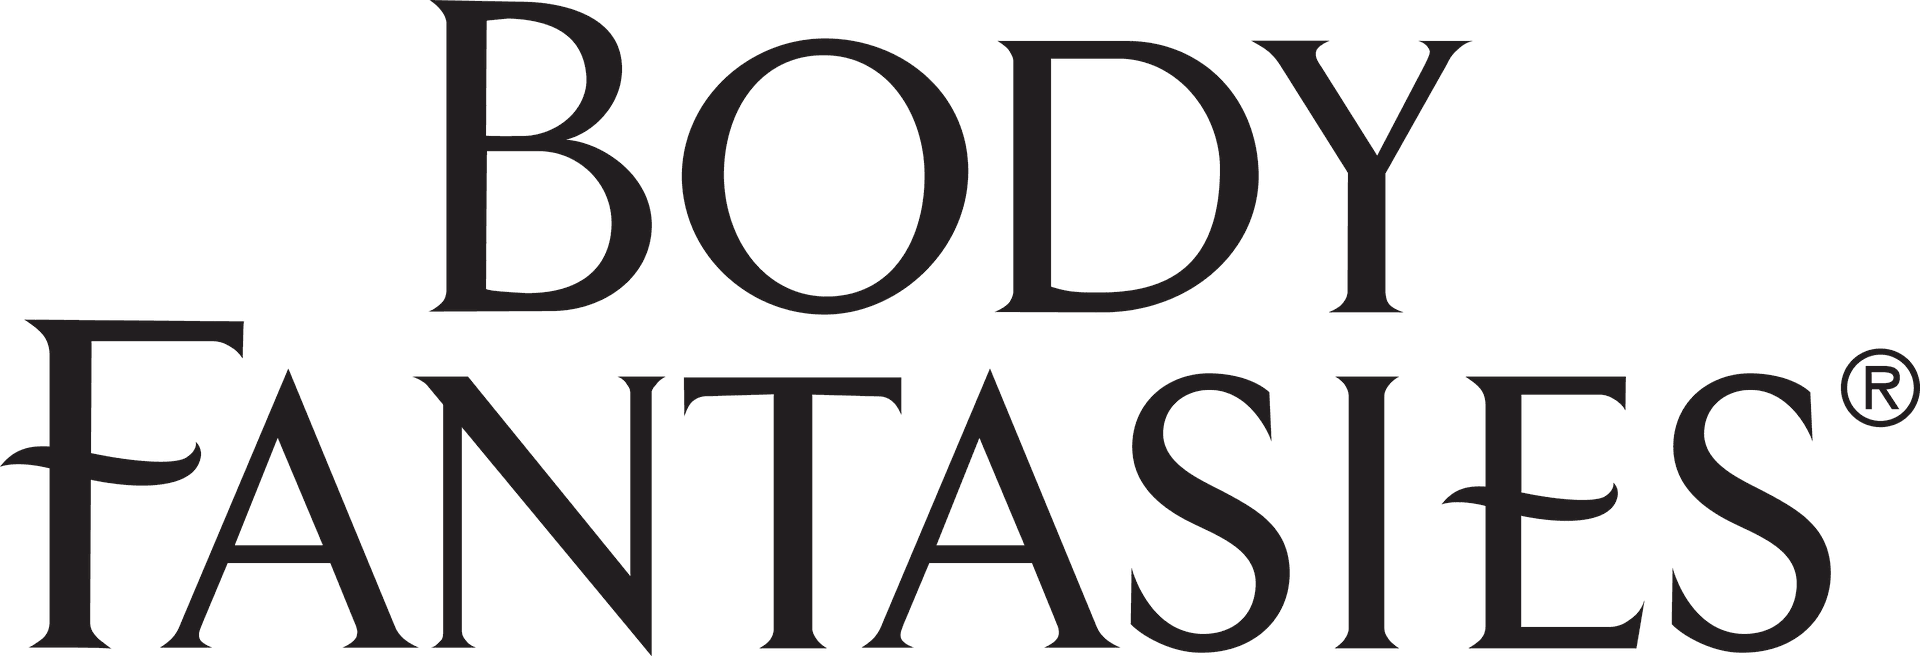 Brand: Body Fantasies